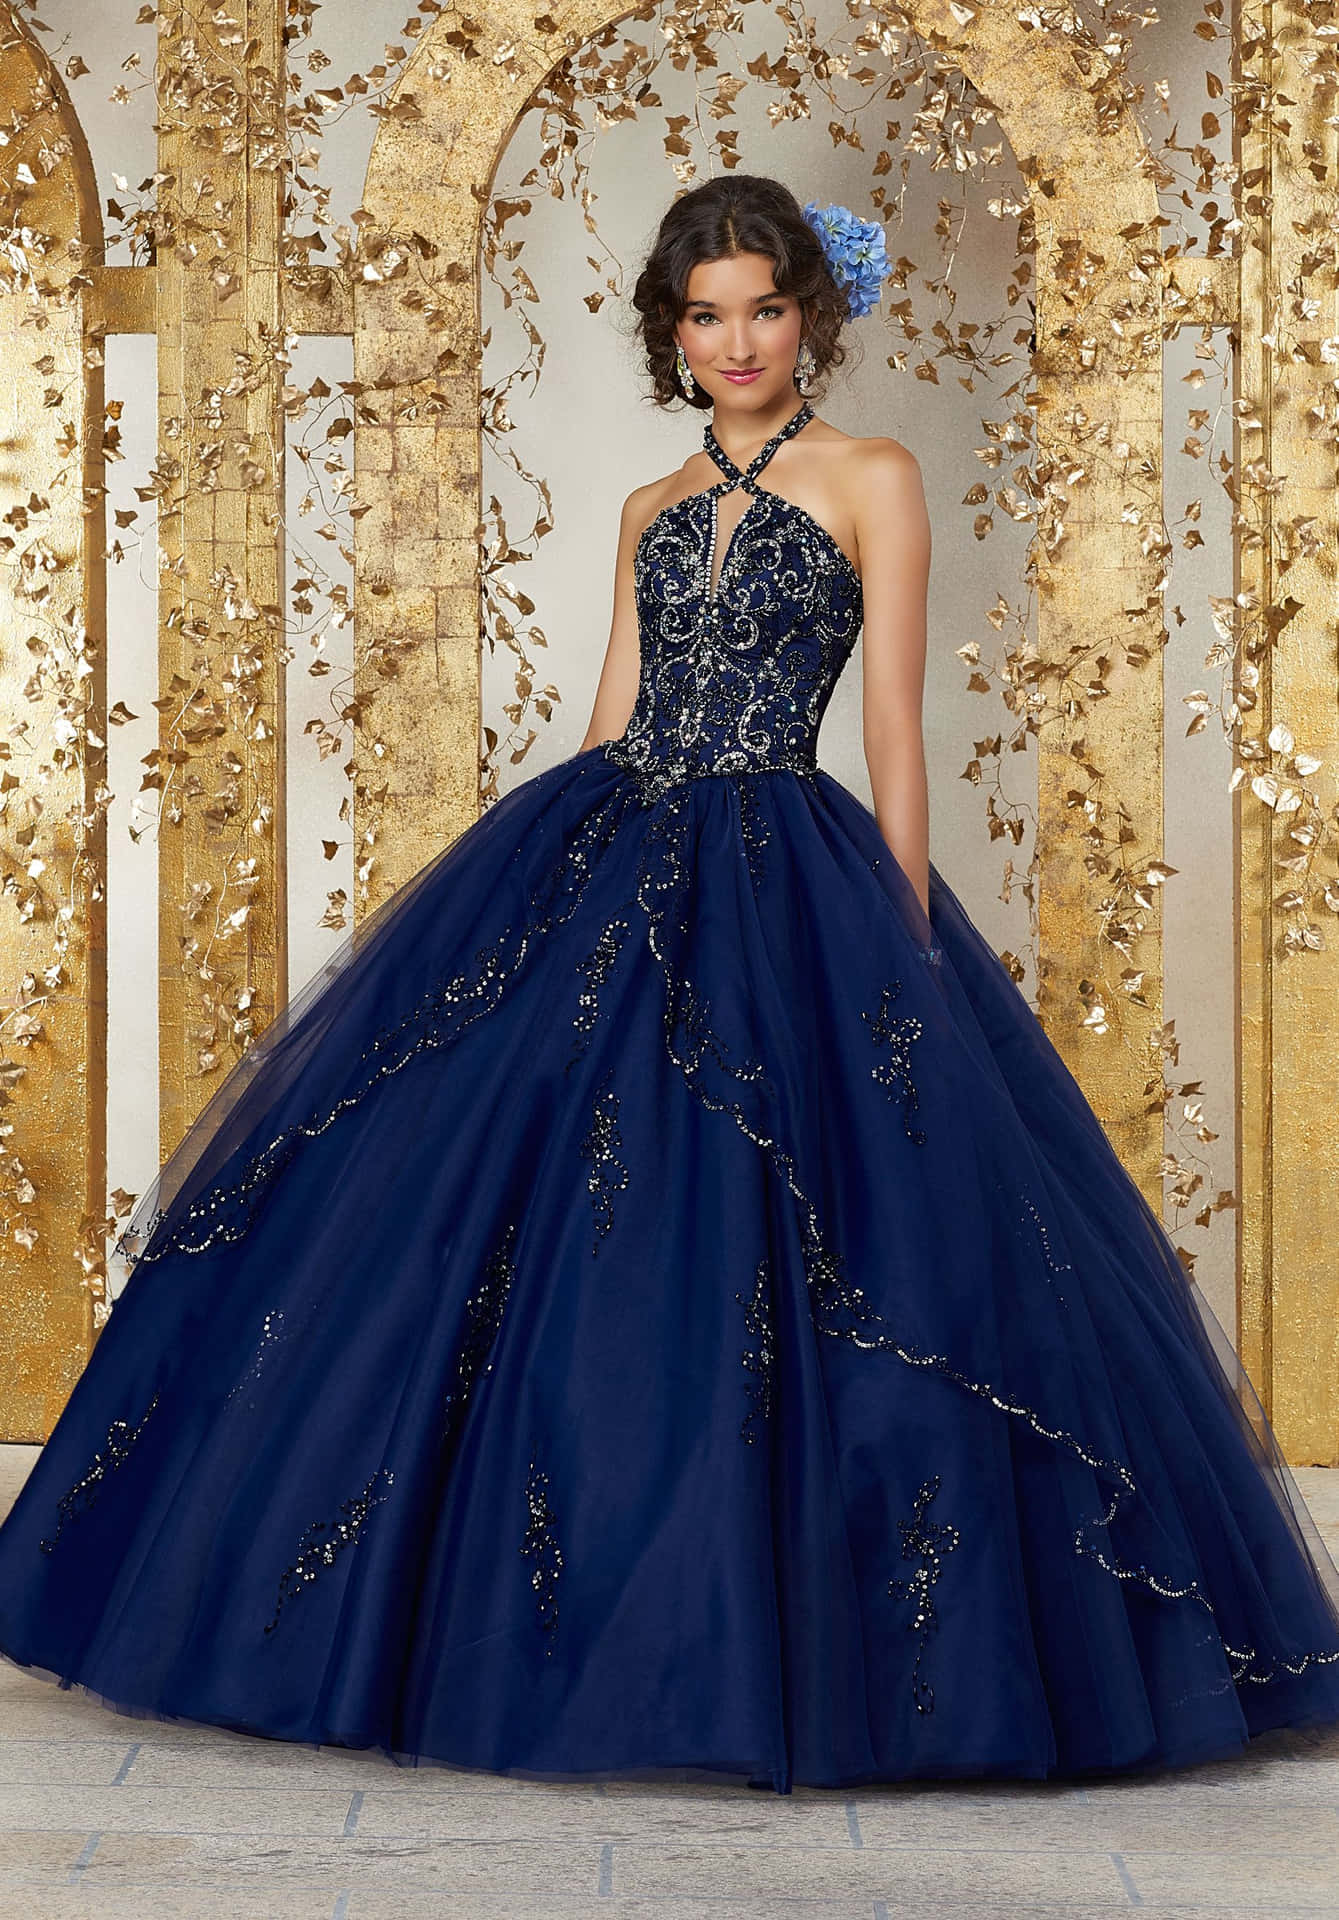 Caption: Elegant Navy Blue Dress Wallpaper